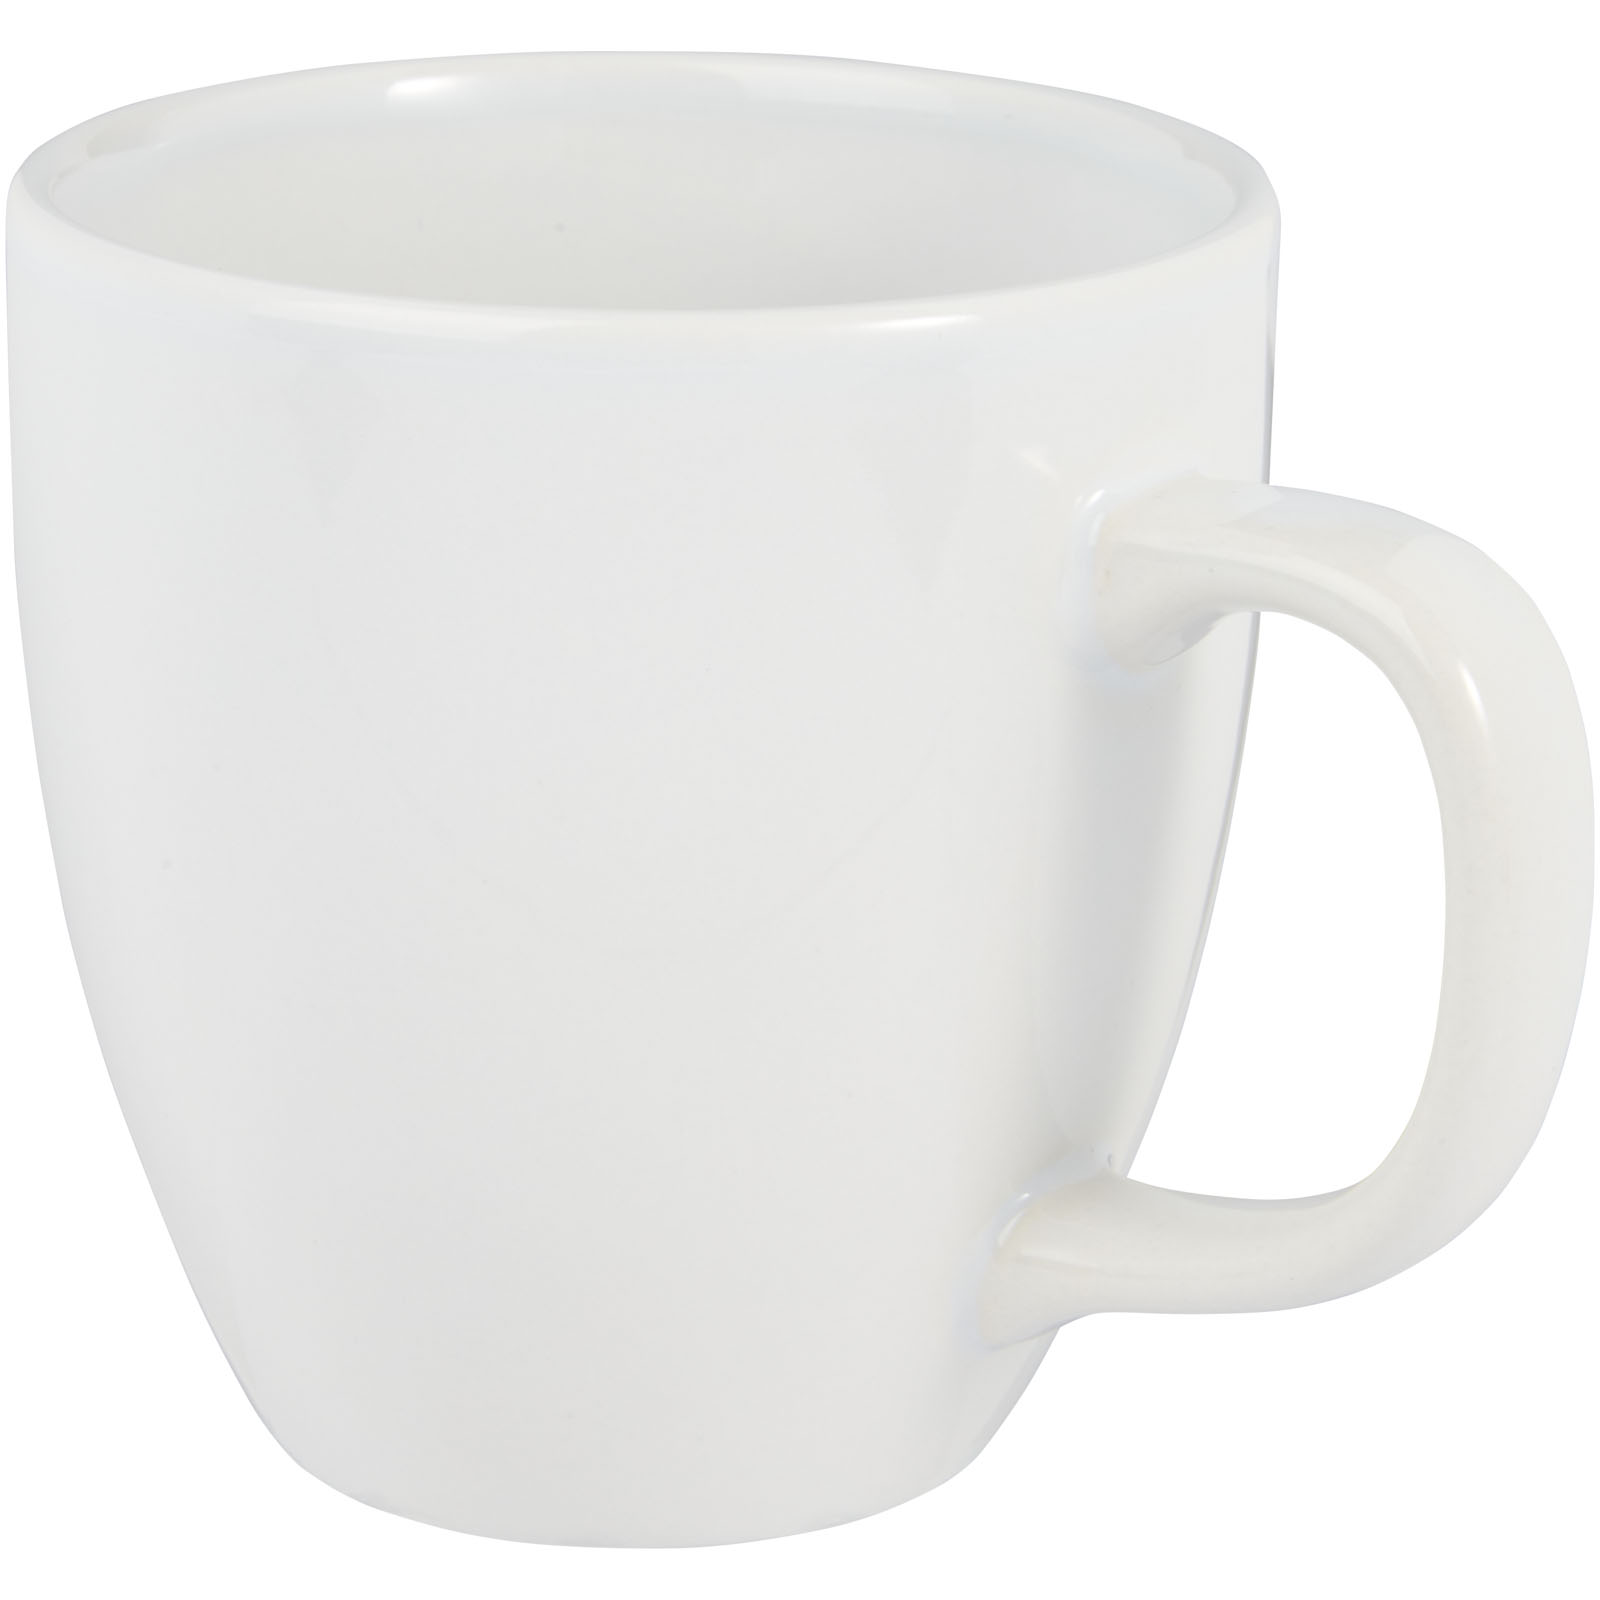 Standard mugs - Moni 430 ml ceramic mug